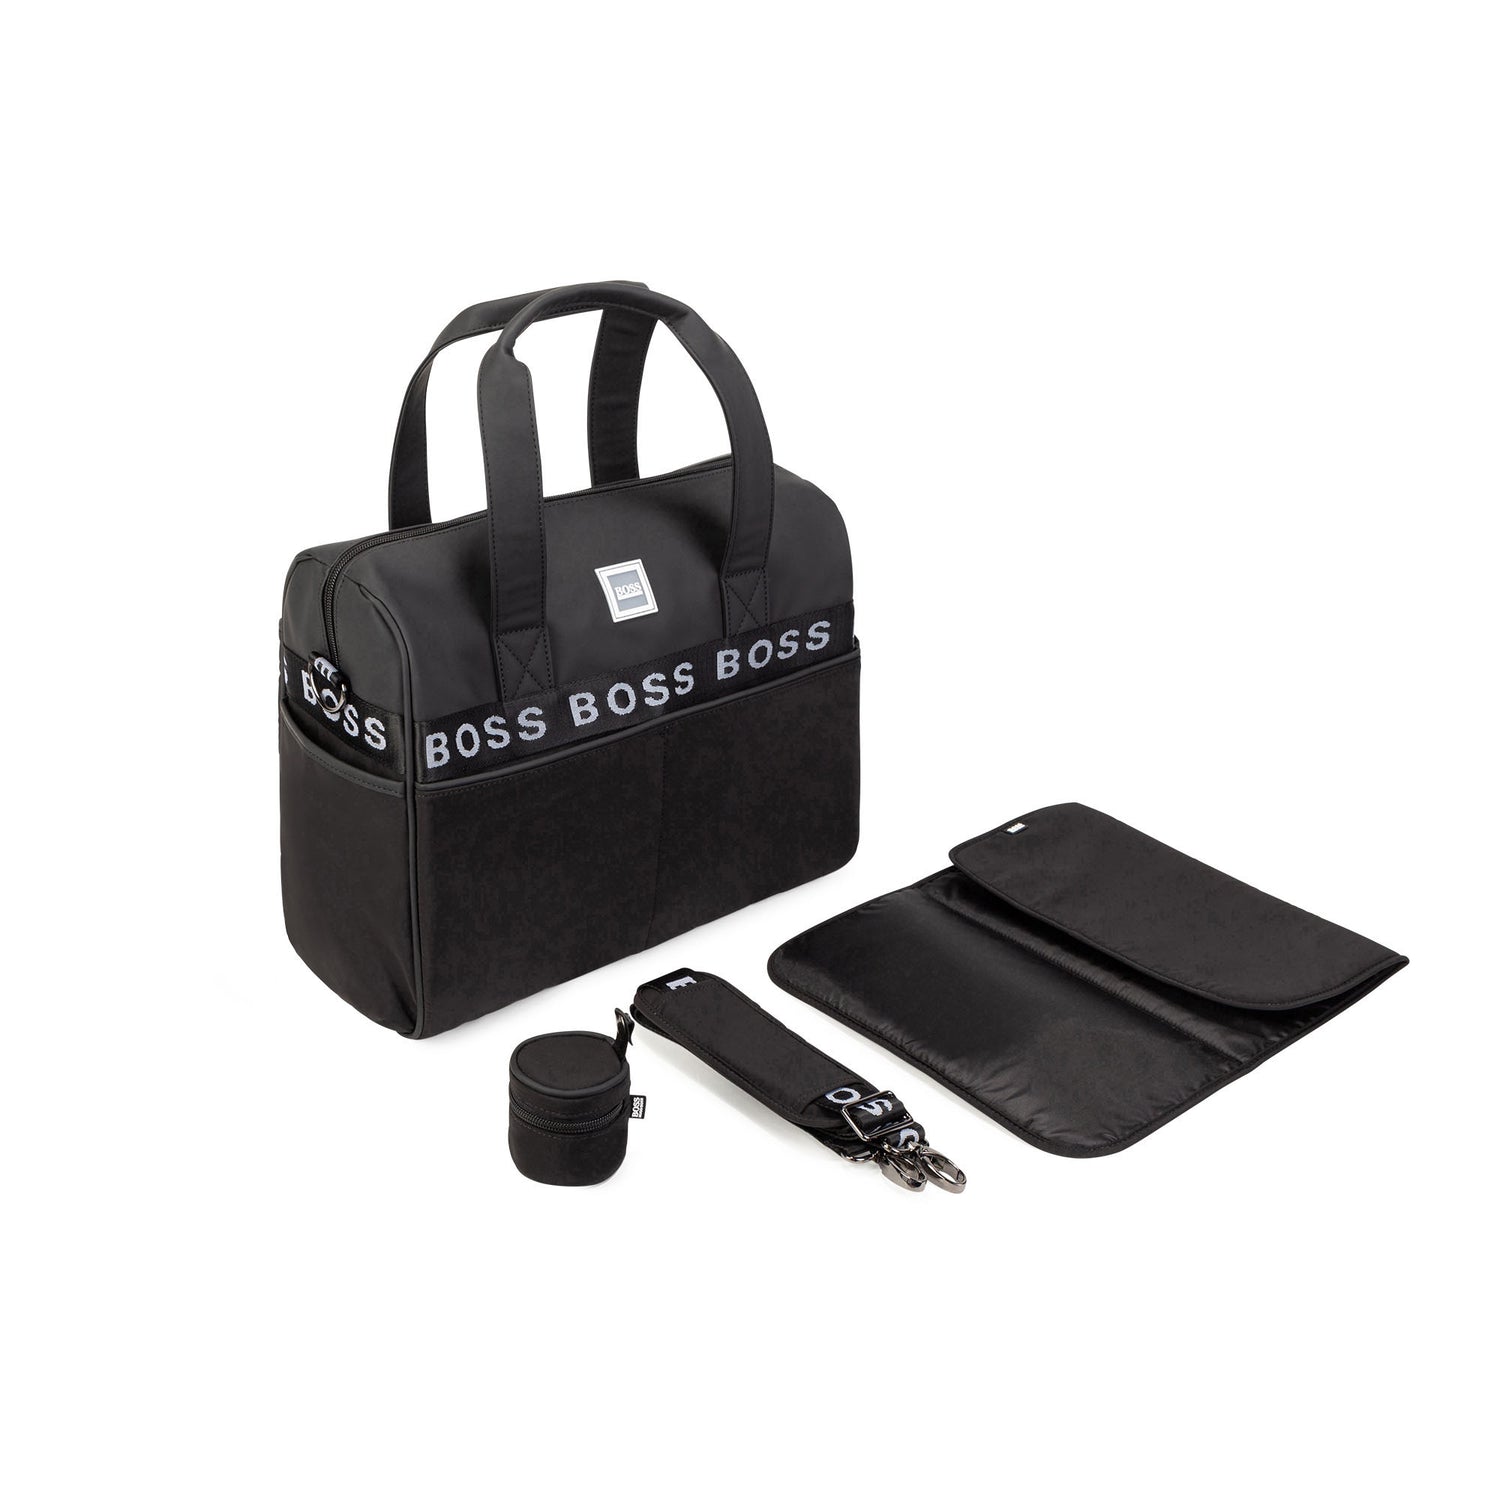 Boss Changing Bag Style: J90254